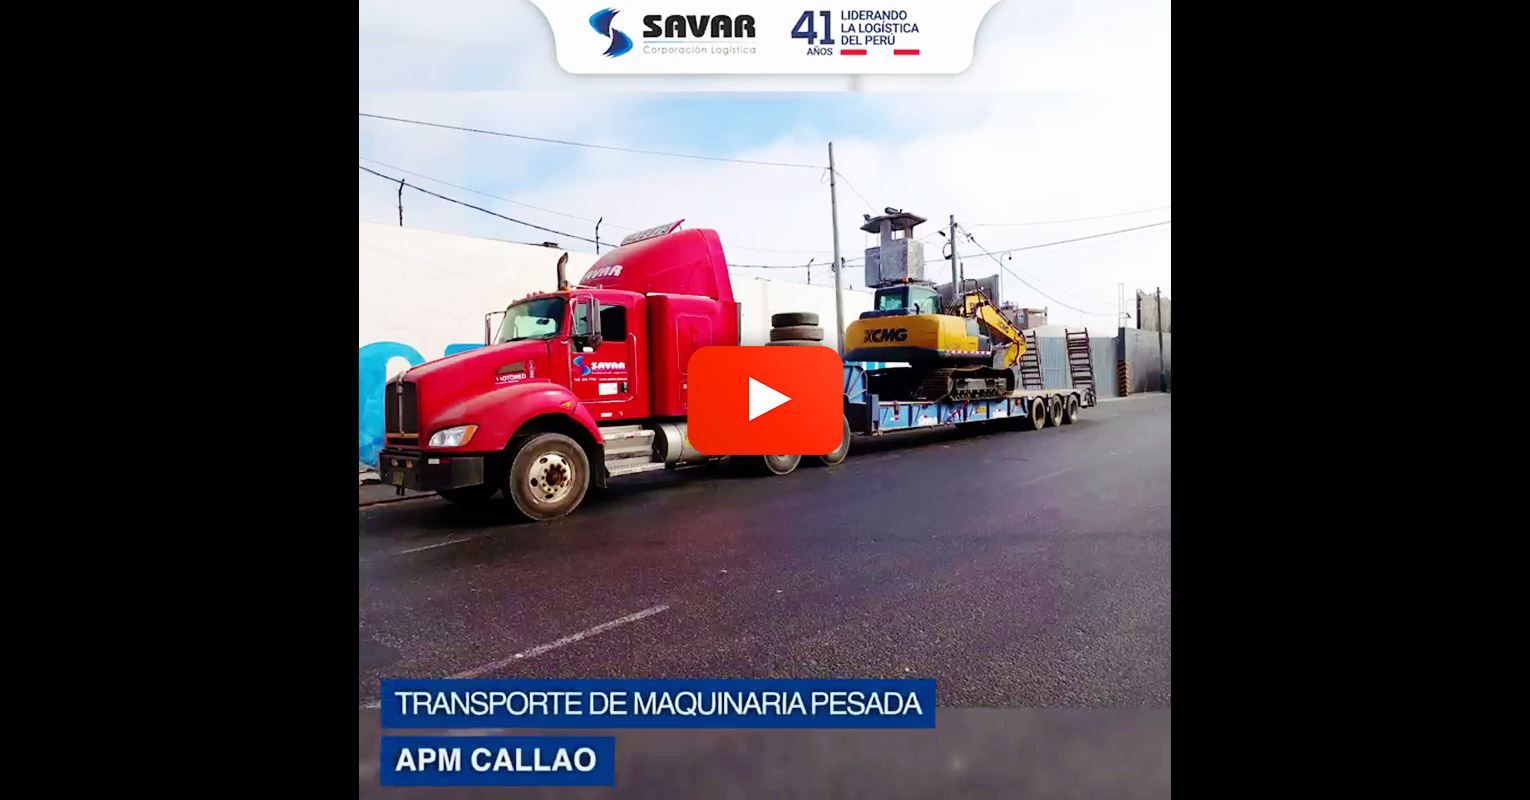 Video - Savar in Peru Shows Several Recent Equipment Movements